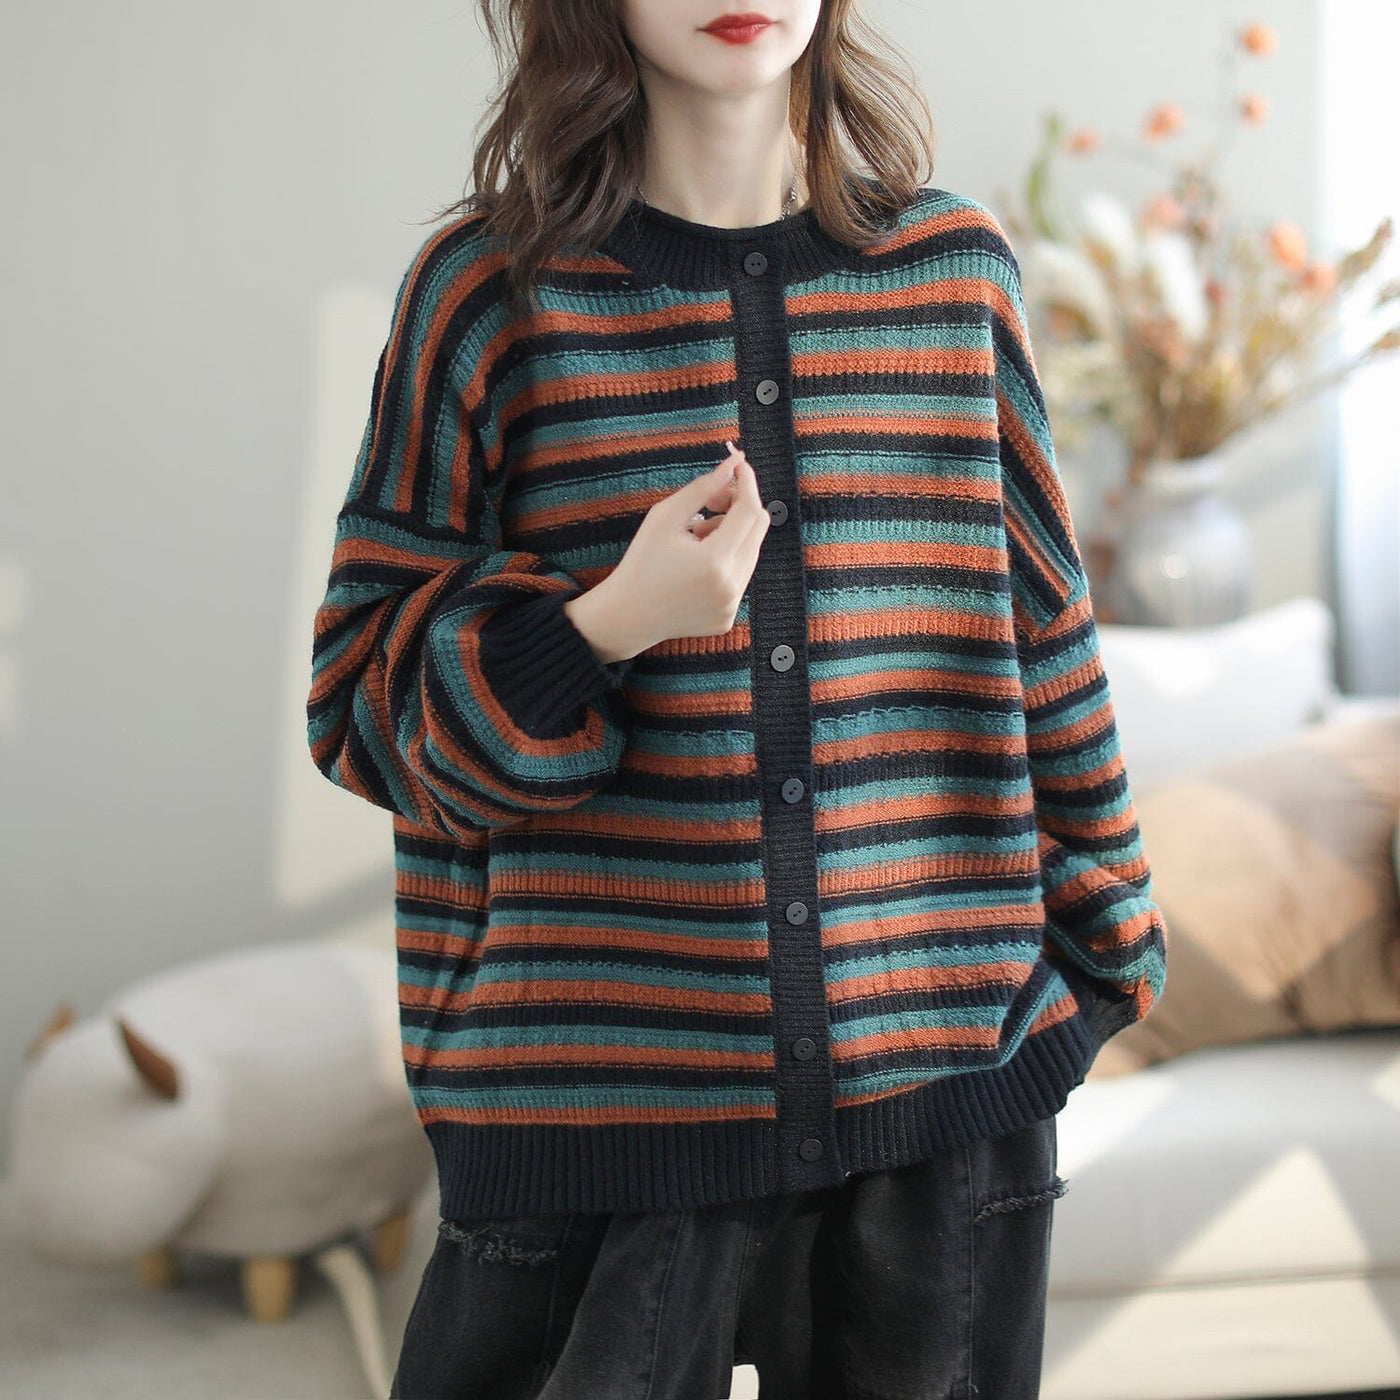 Women Autumn Fashion Stripe Casual Knitted Cardigan